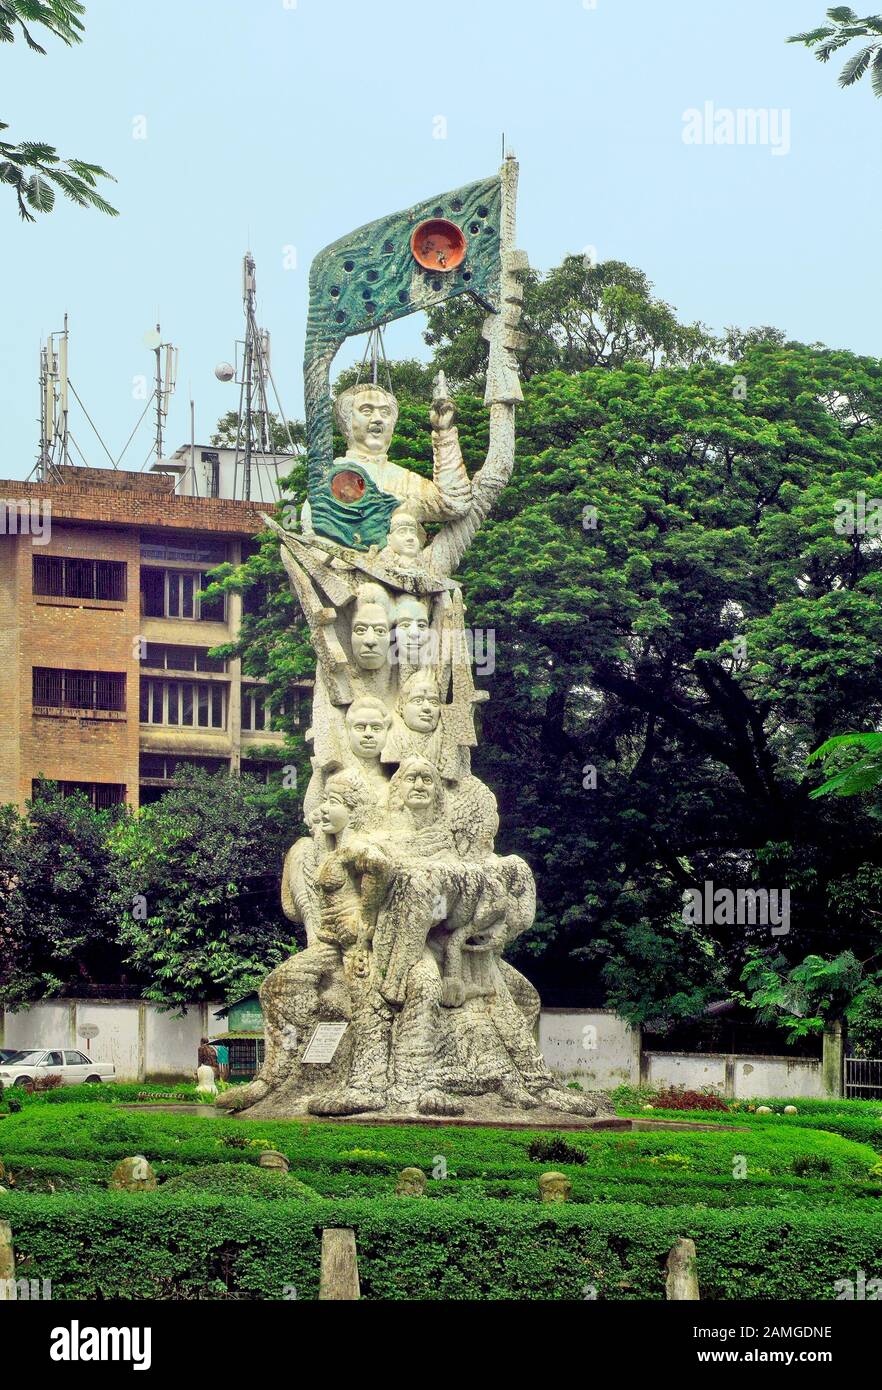 Dhaka, Bangladesh - September 17, 2007: Memorial for freedom fighters on Dhaka University campus Stock Photo